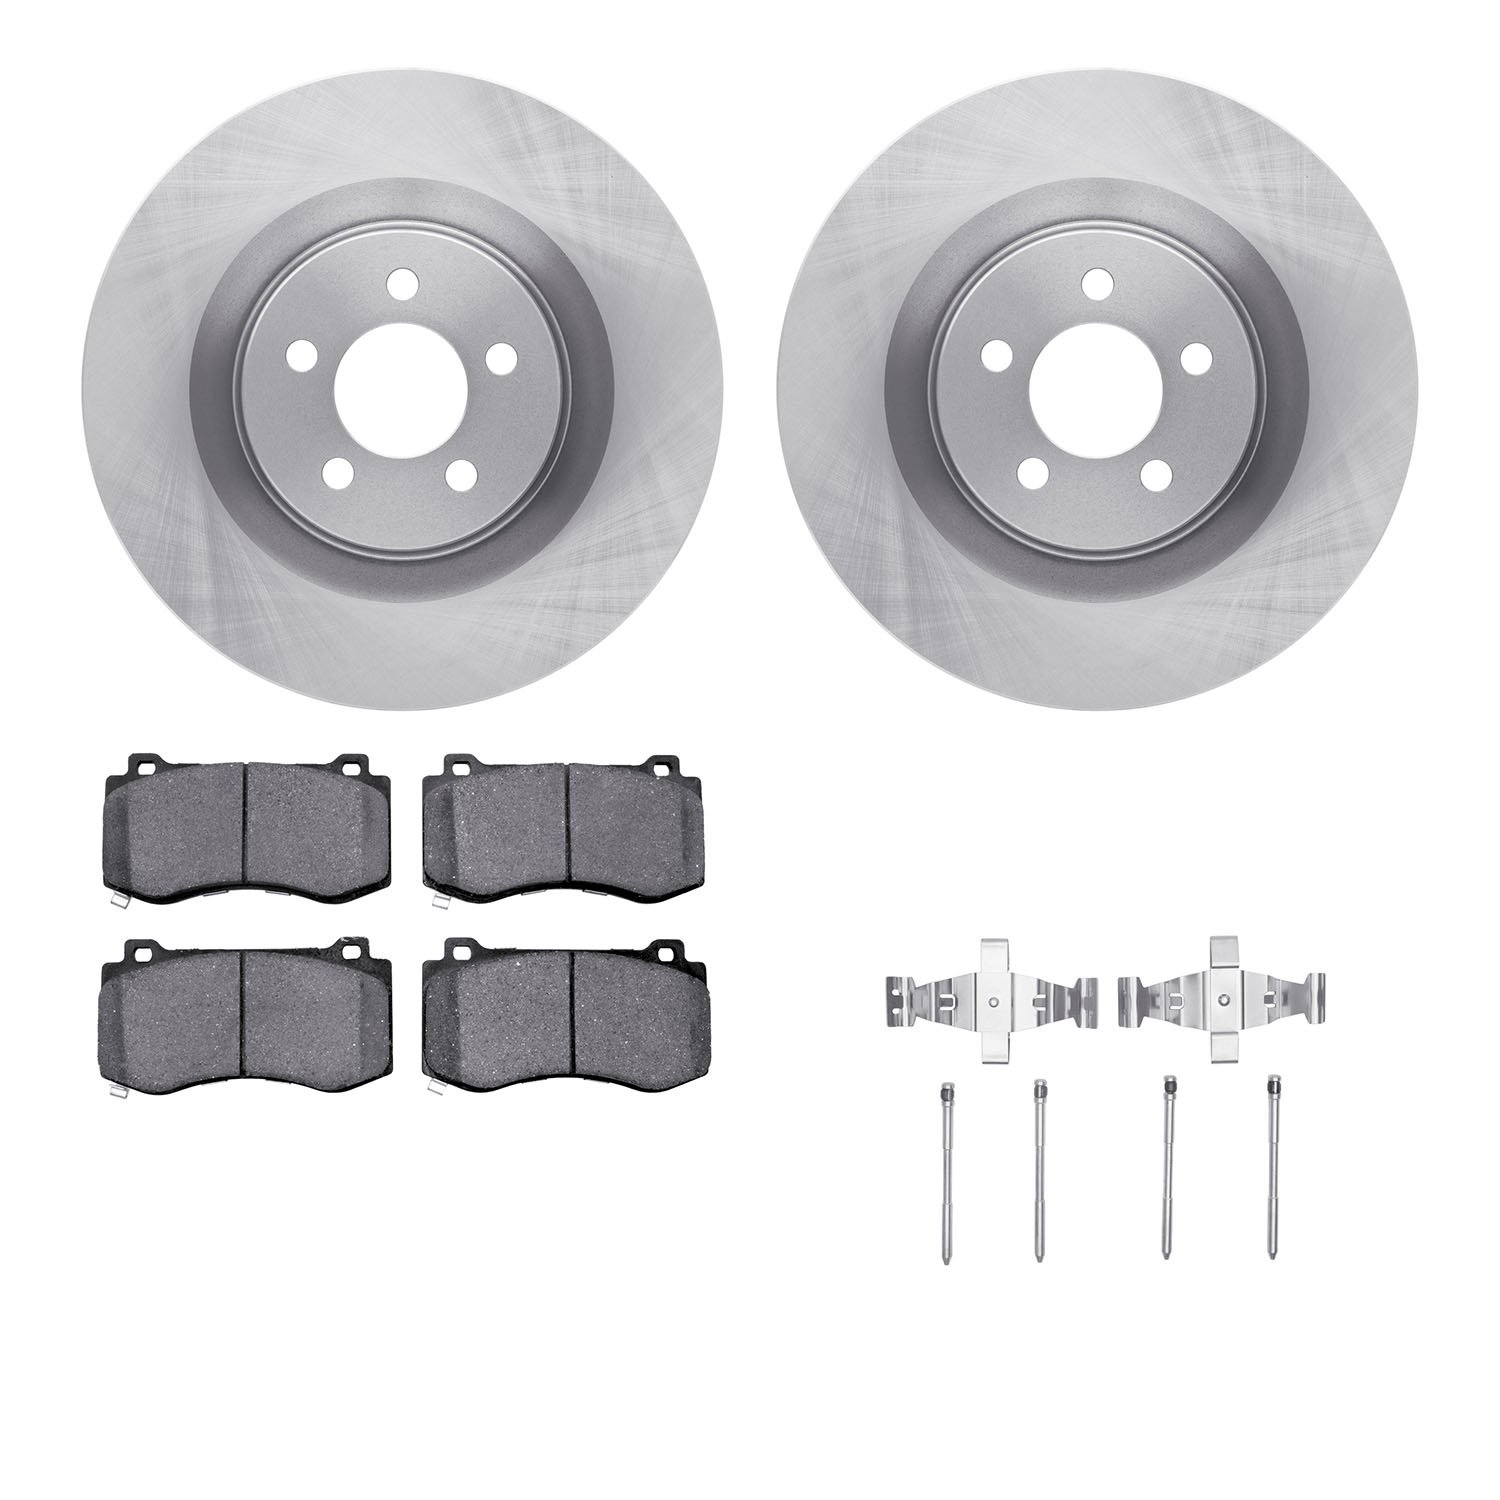 6412-39001 Brake Rotors with Ultimate-Duty Brake Pads Kit & Hardware, Fits Select Mopar, Position: Front